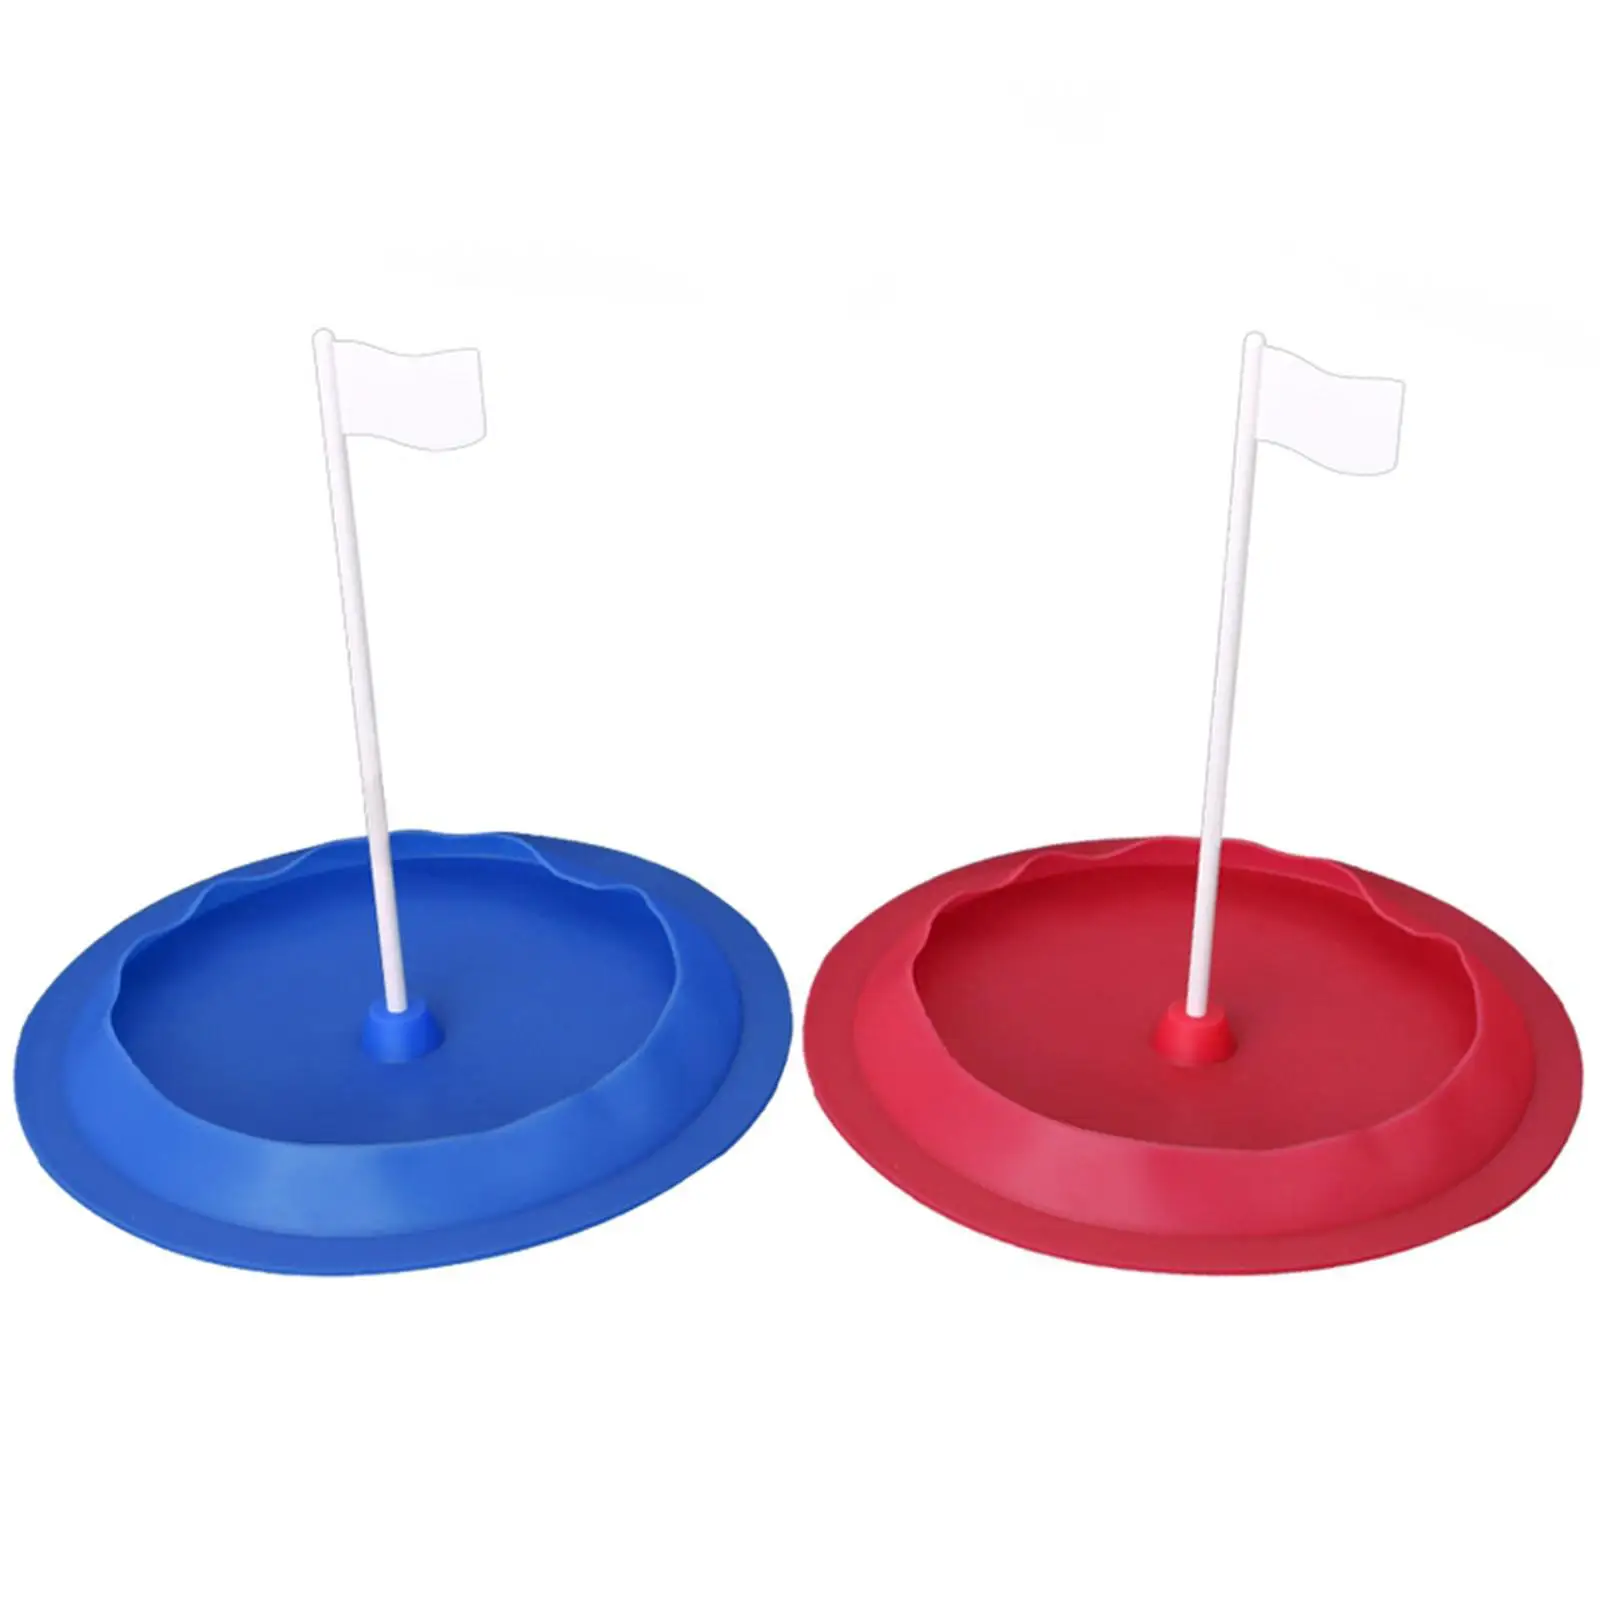 Golf Putting Cup Golf Putting Training, Portable Lightweight Men Women Practice Golf Accessories Golf Putting Hole Cup